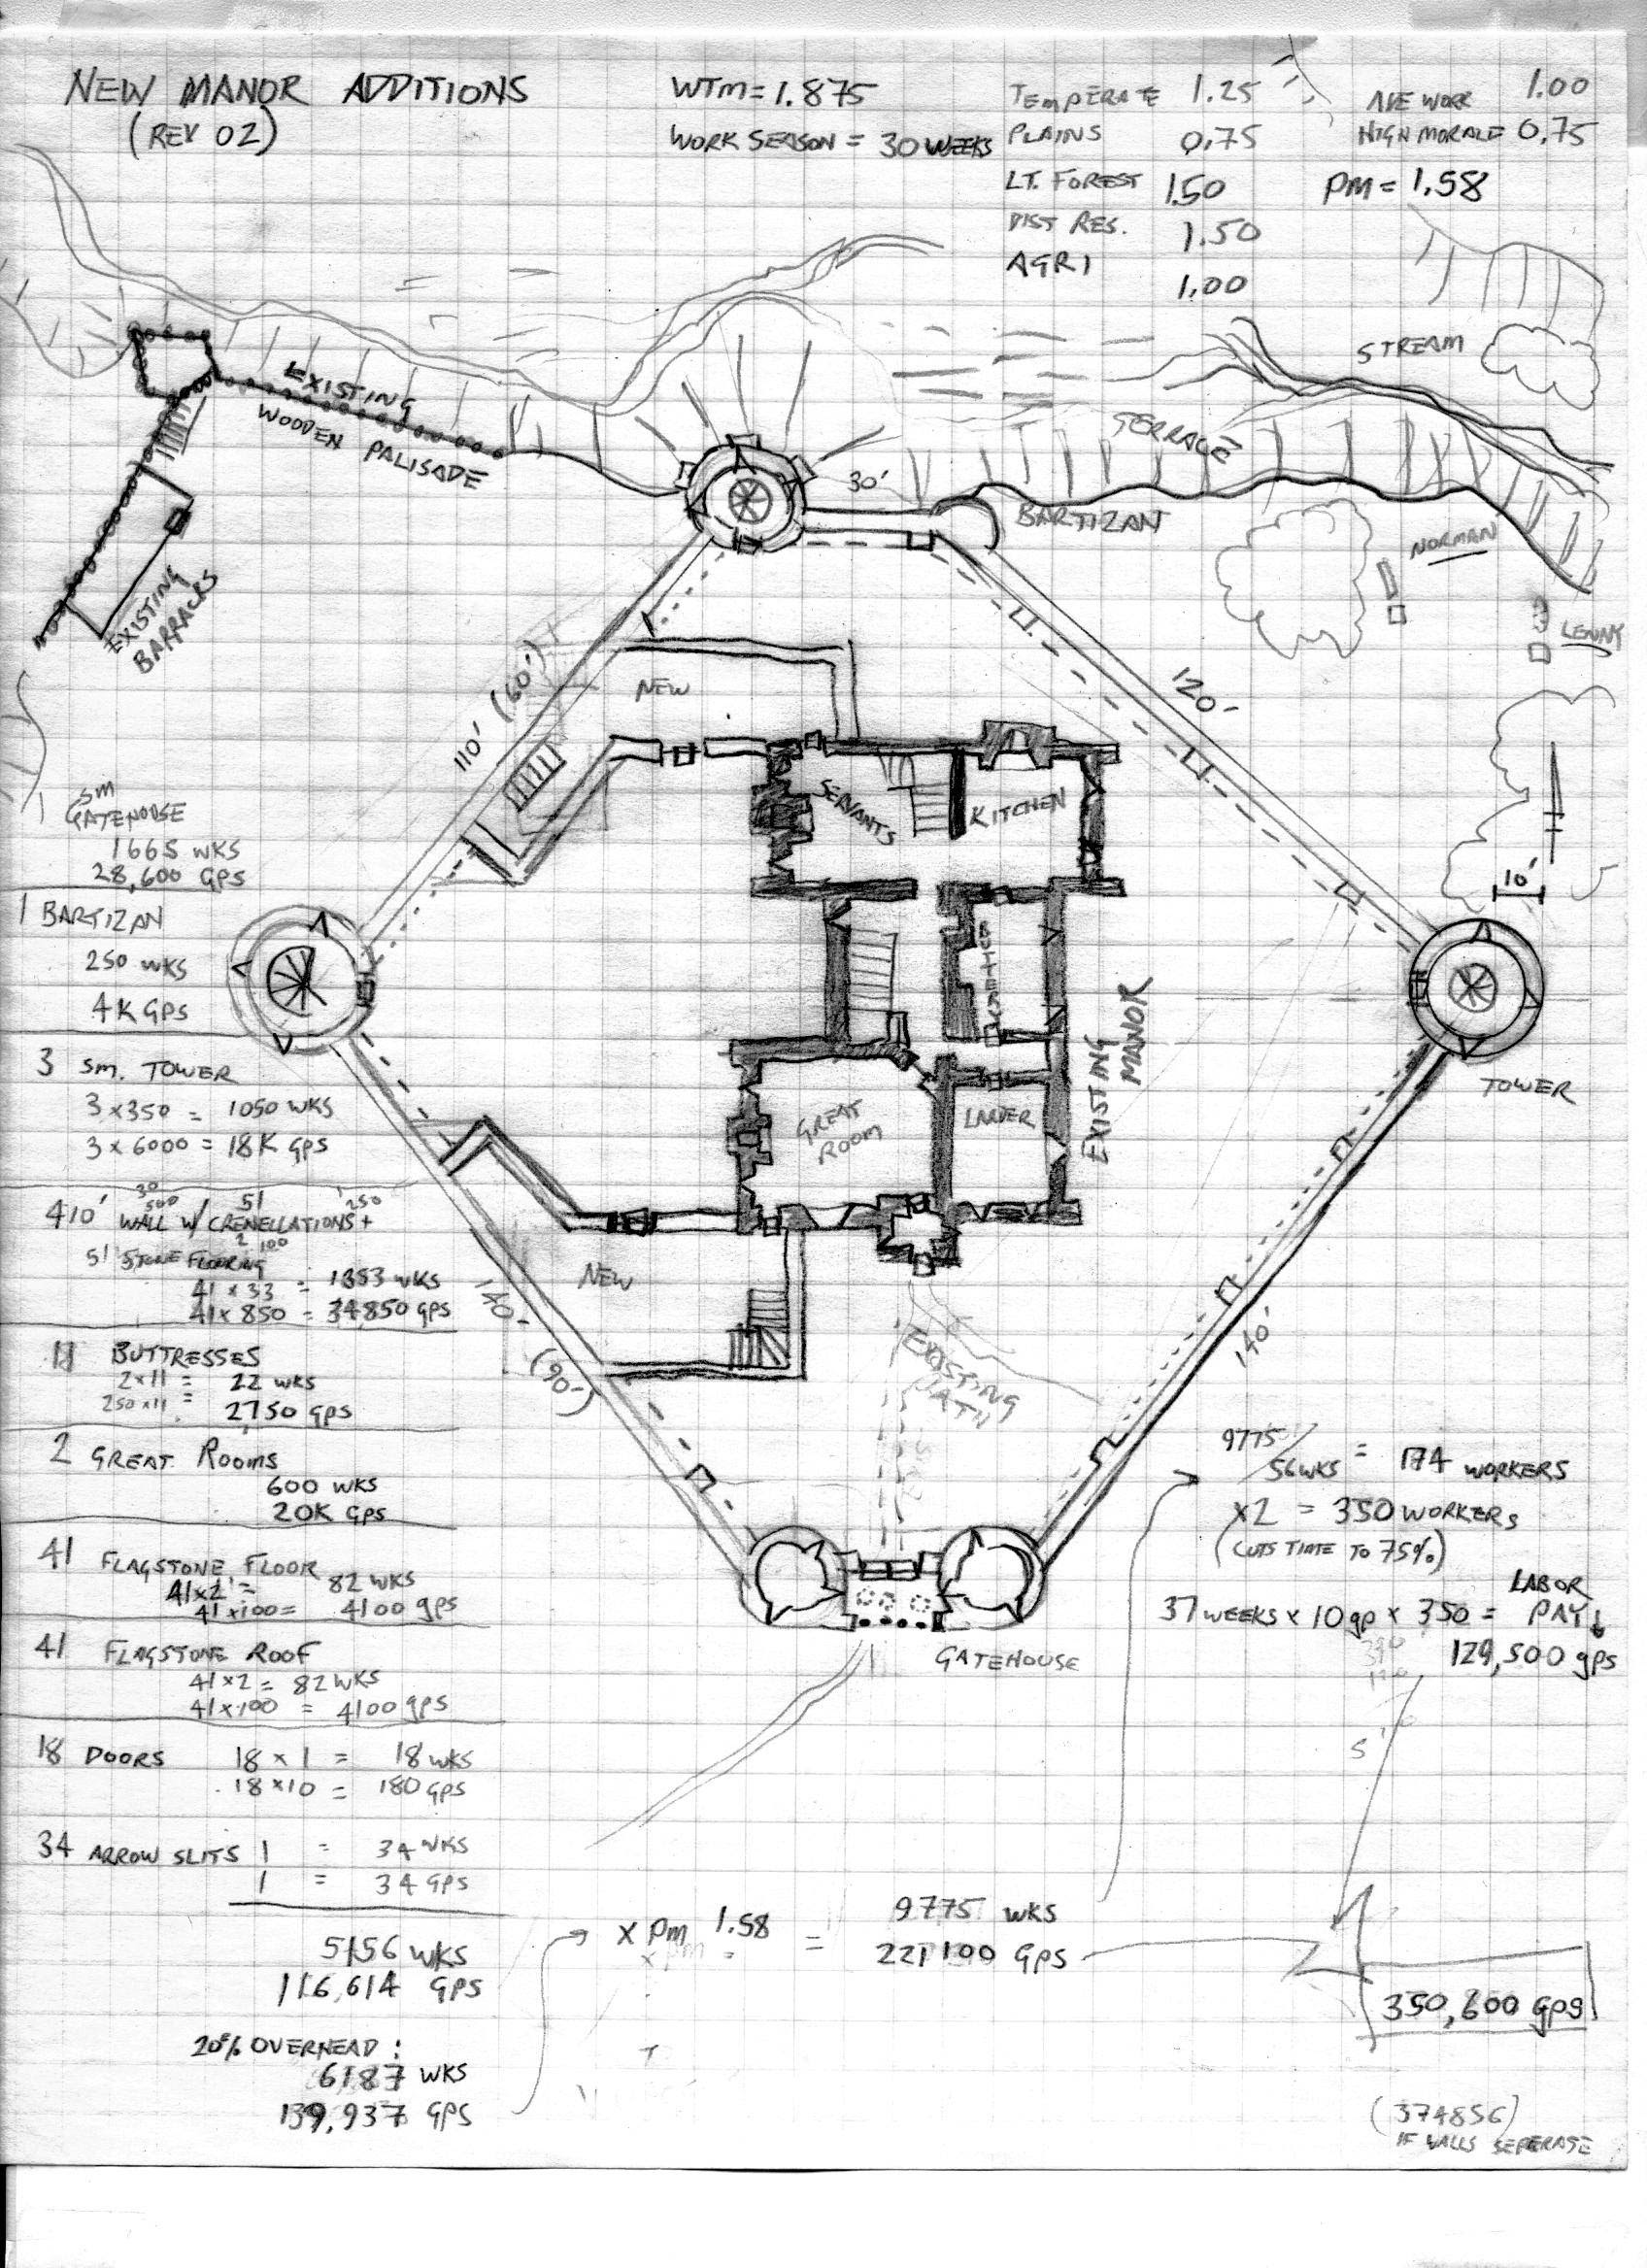 Random Castle Floor Plan Generator Review Home Co